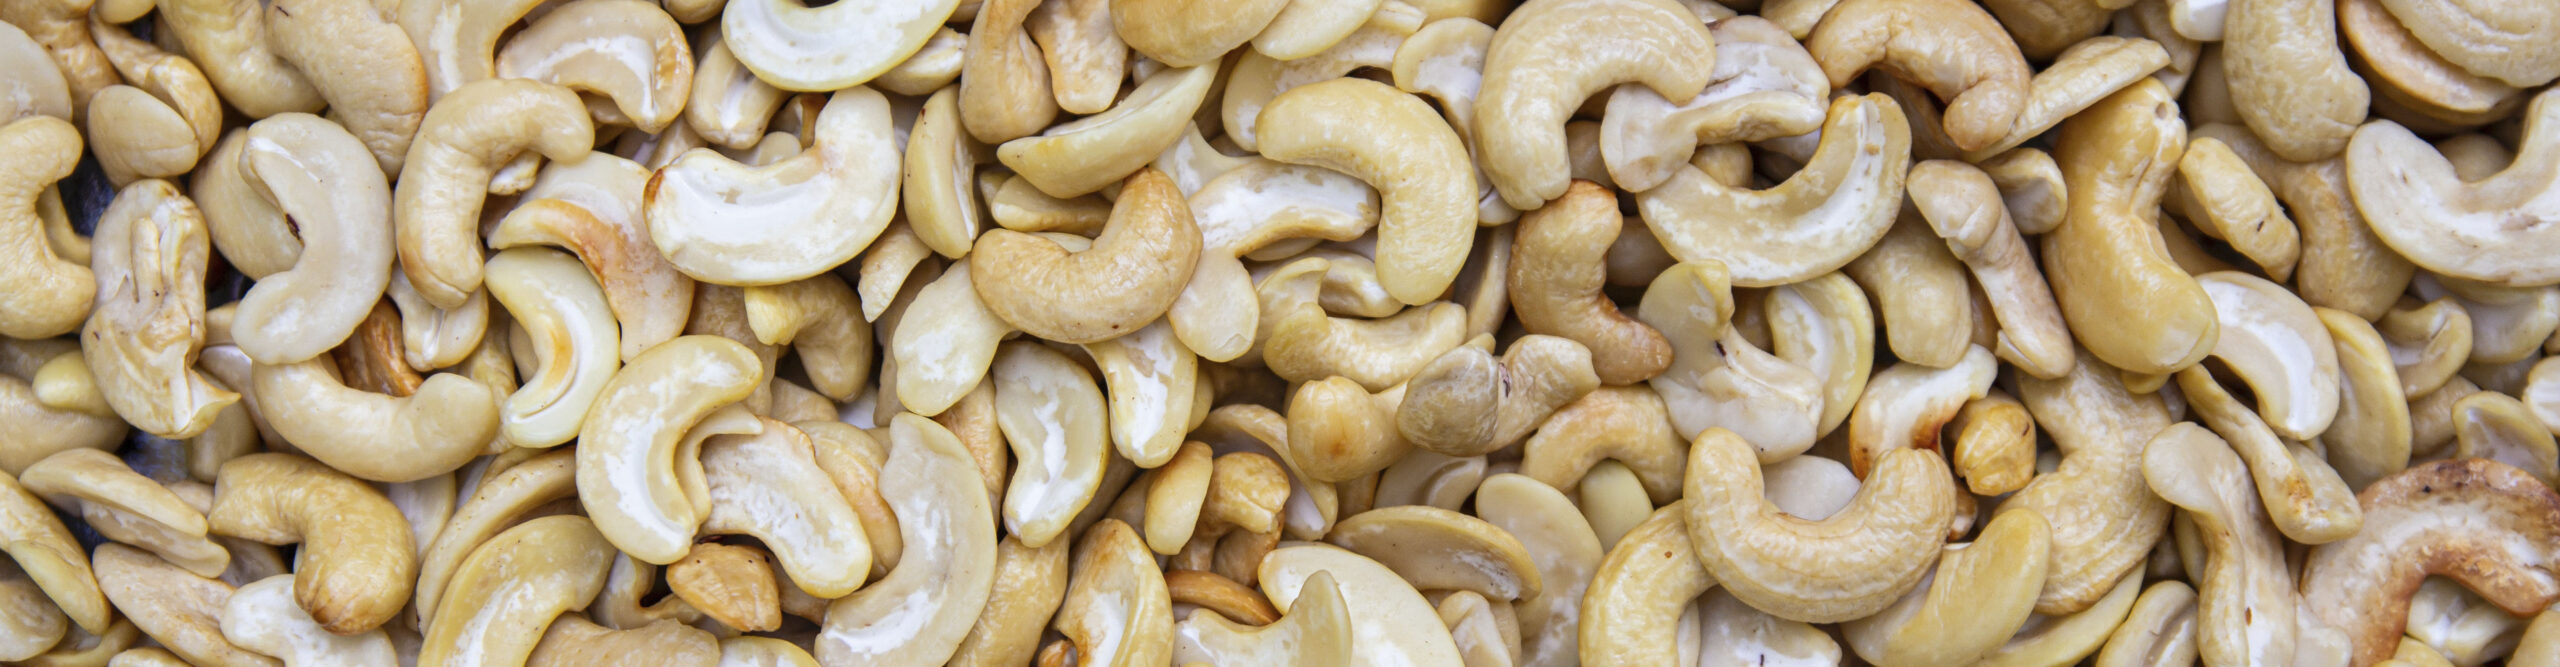 Cashew nut produktion